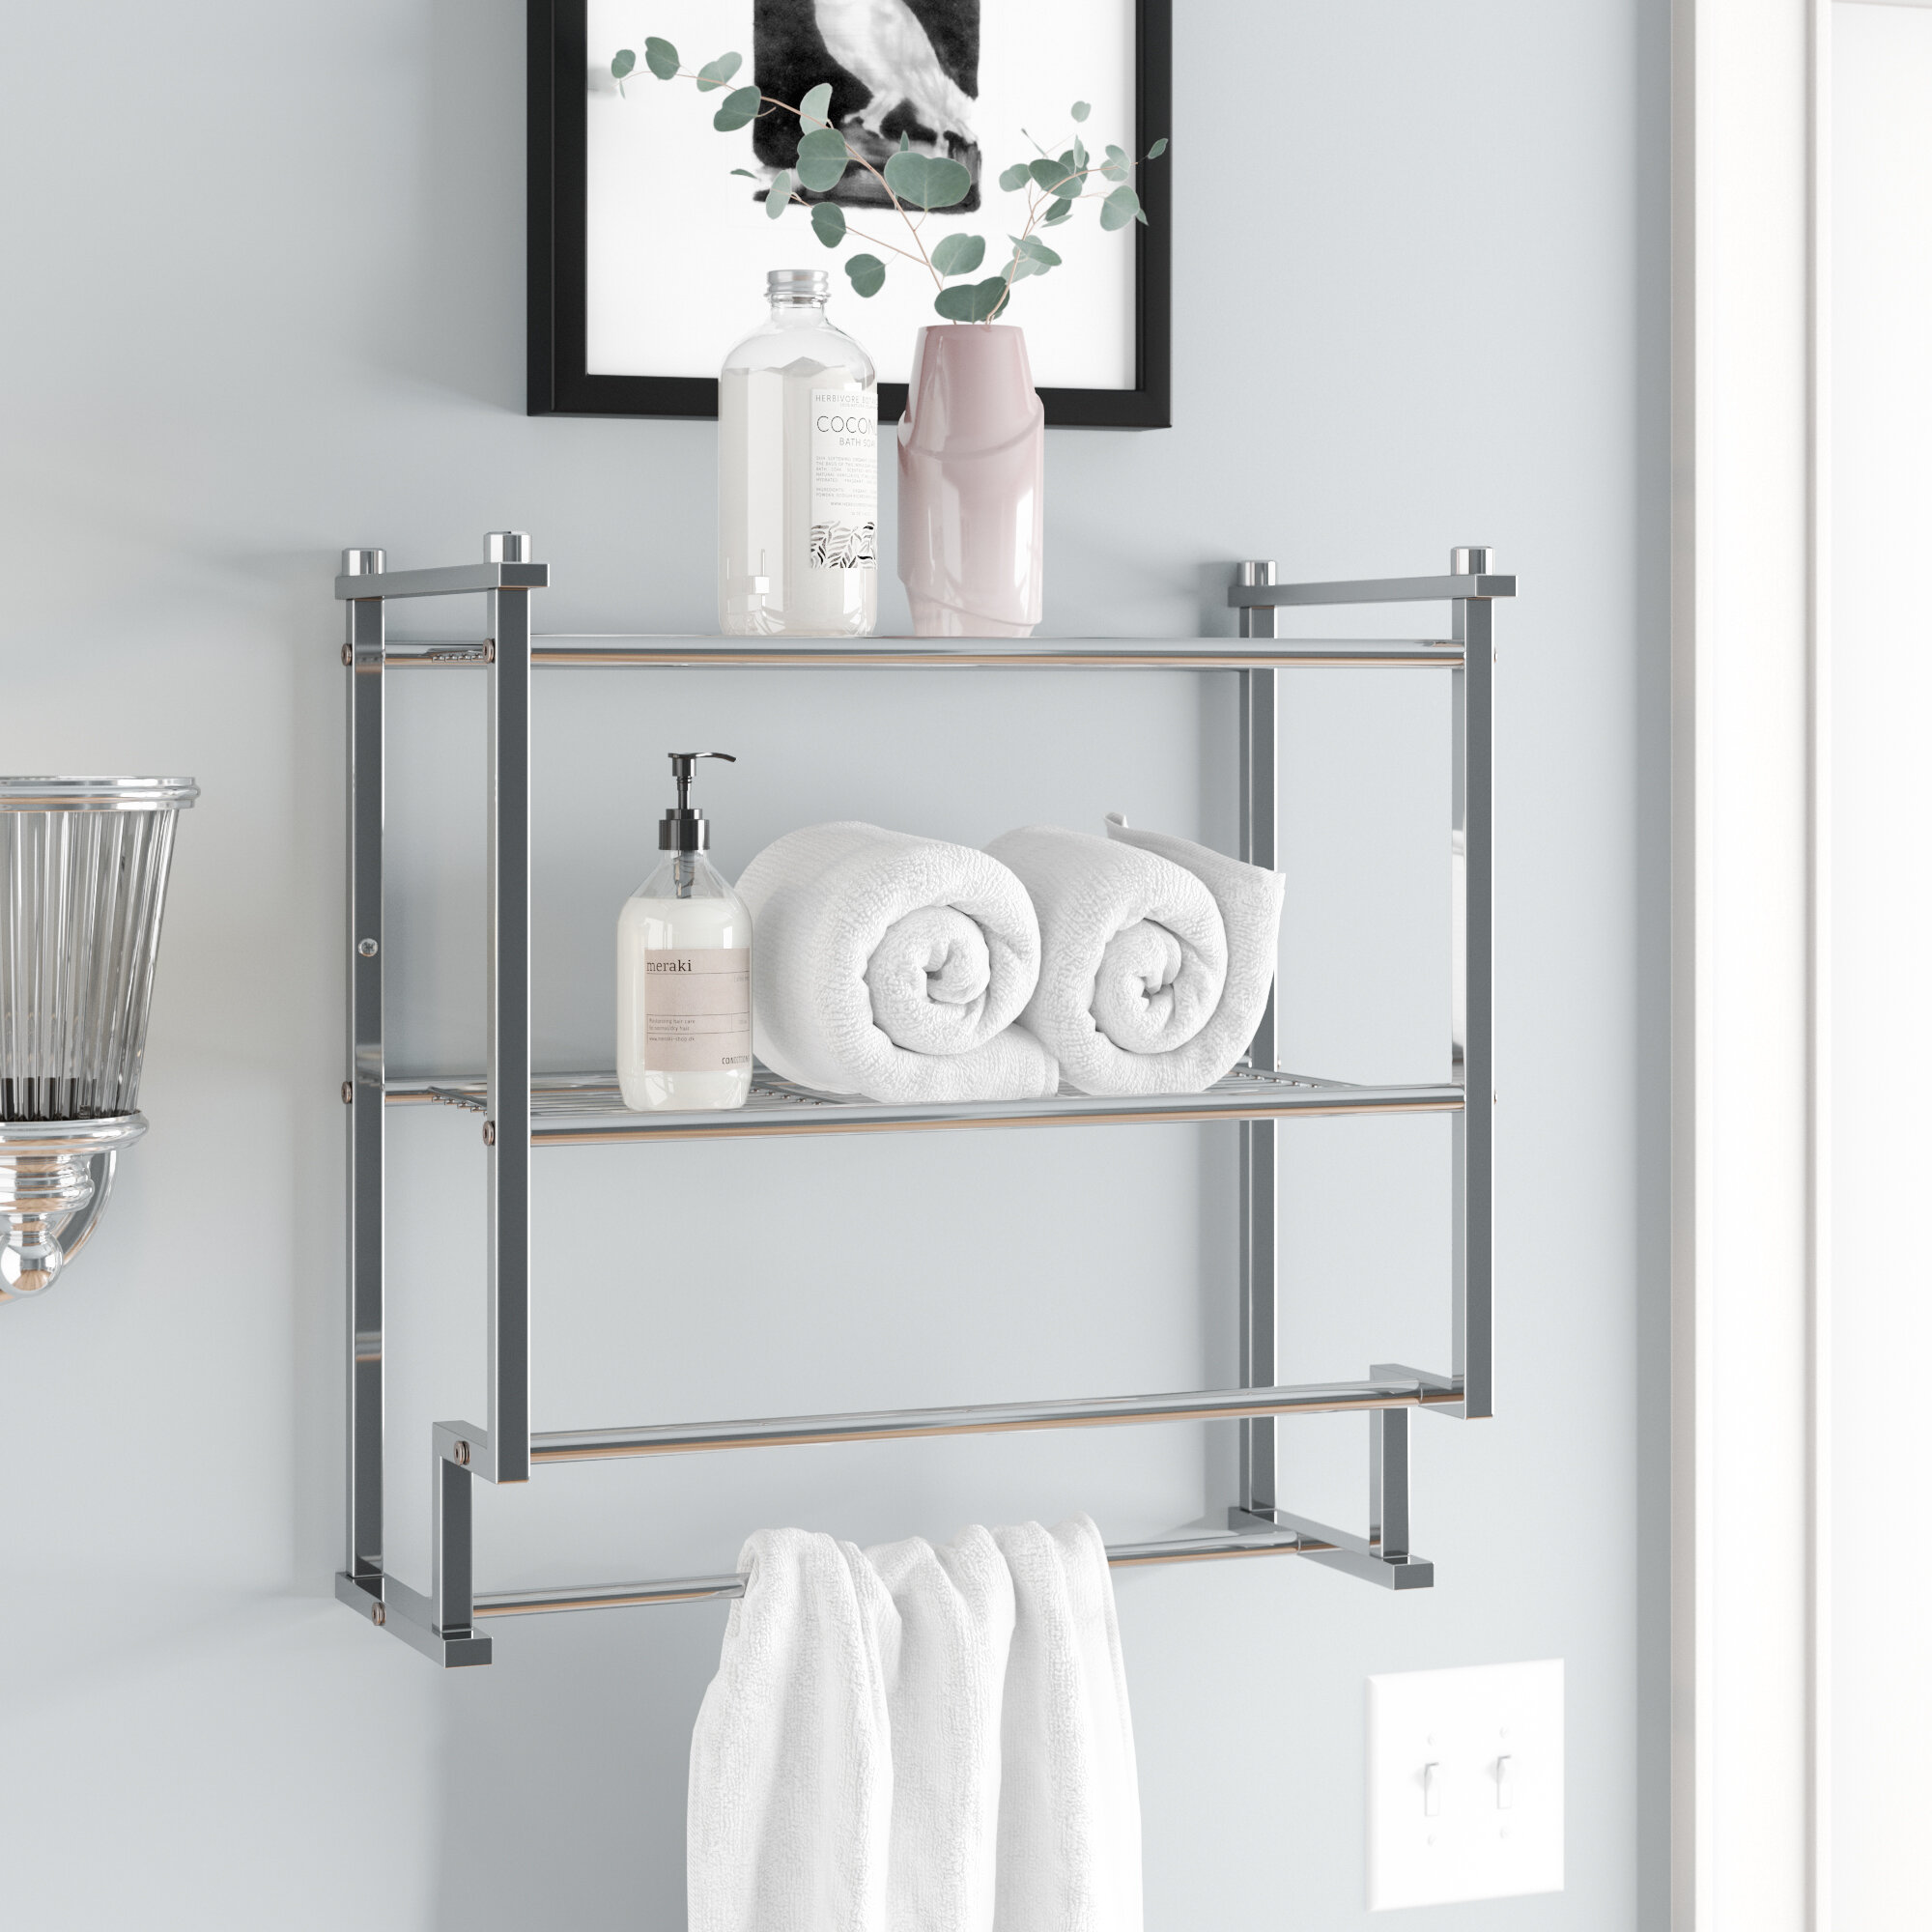 SunnyPoint Classic Square Bathroom Shelf, Tier Shelf with Towel Bar Wall 